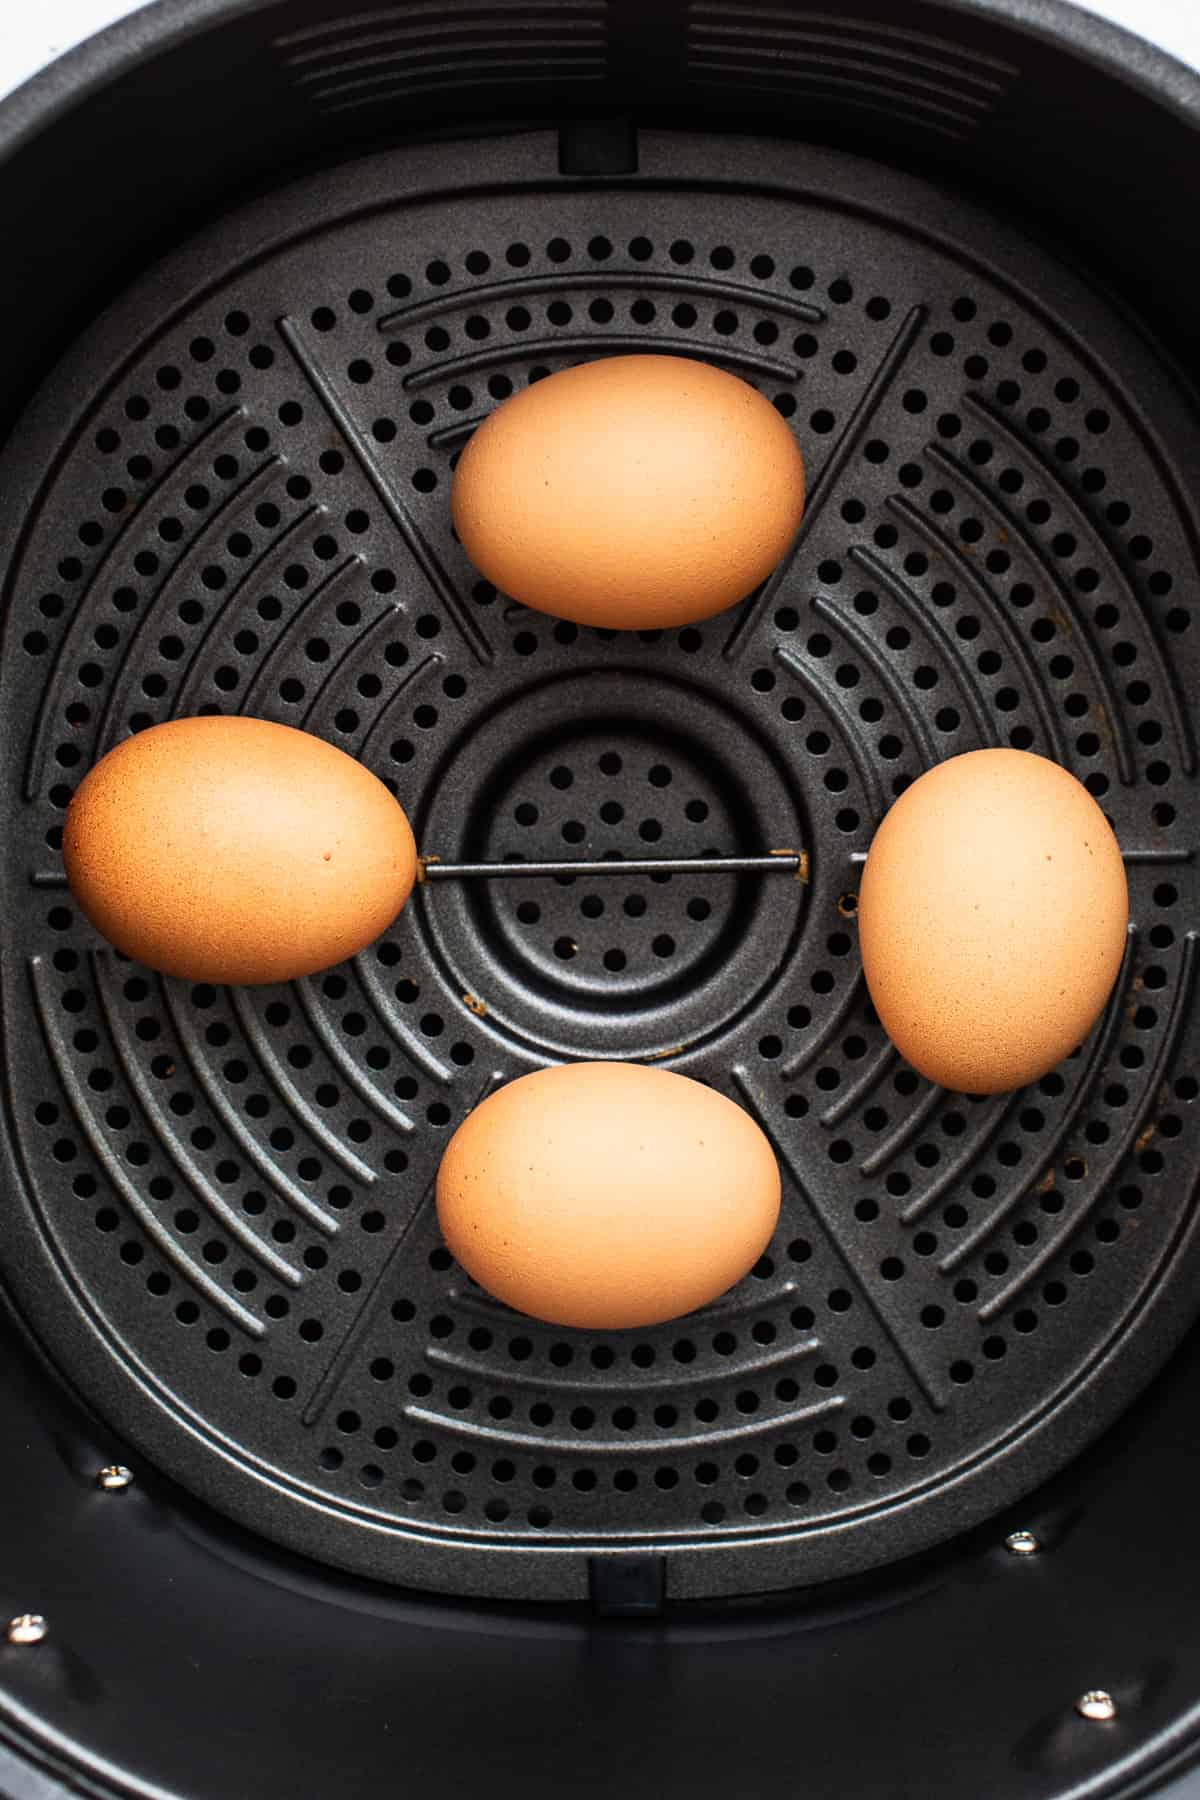 4 eggs in an air fryer basket.